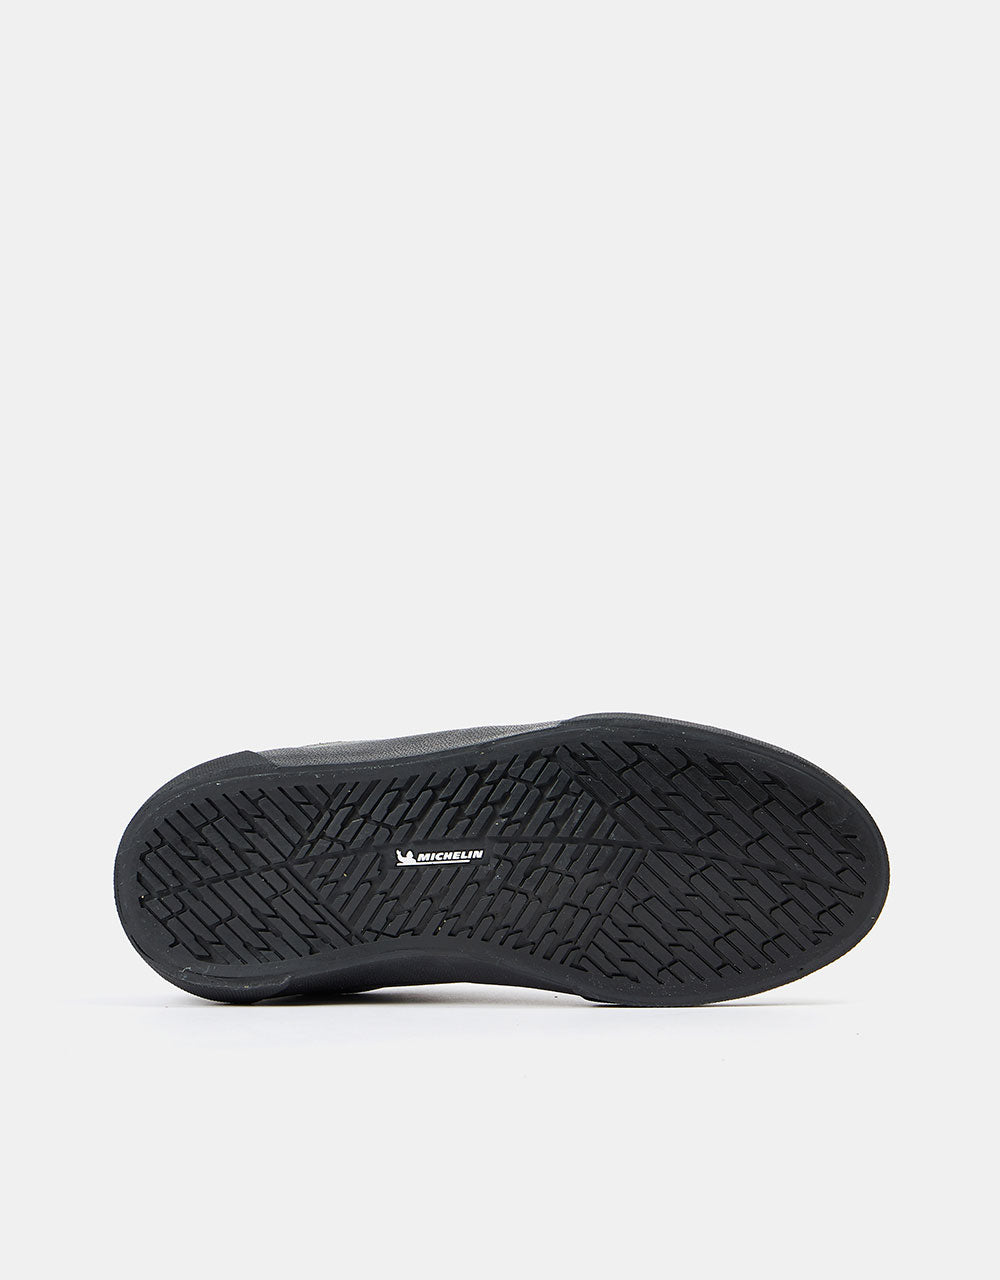 Etnies x Michelin Joslin Vulc Skate Shoes - Dark Grey/Black